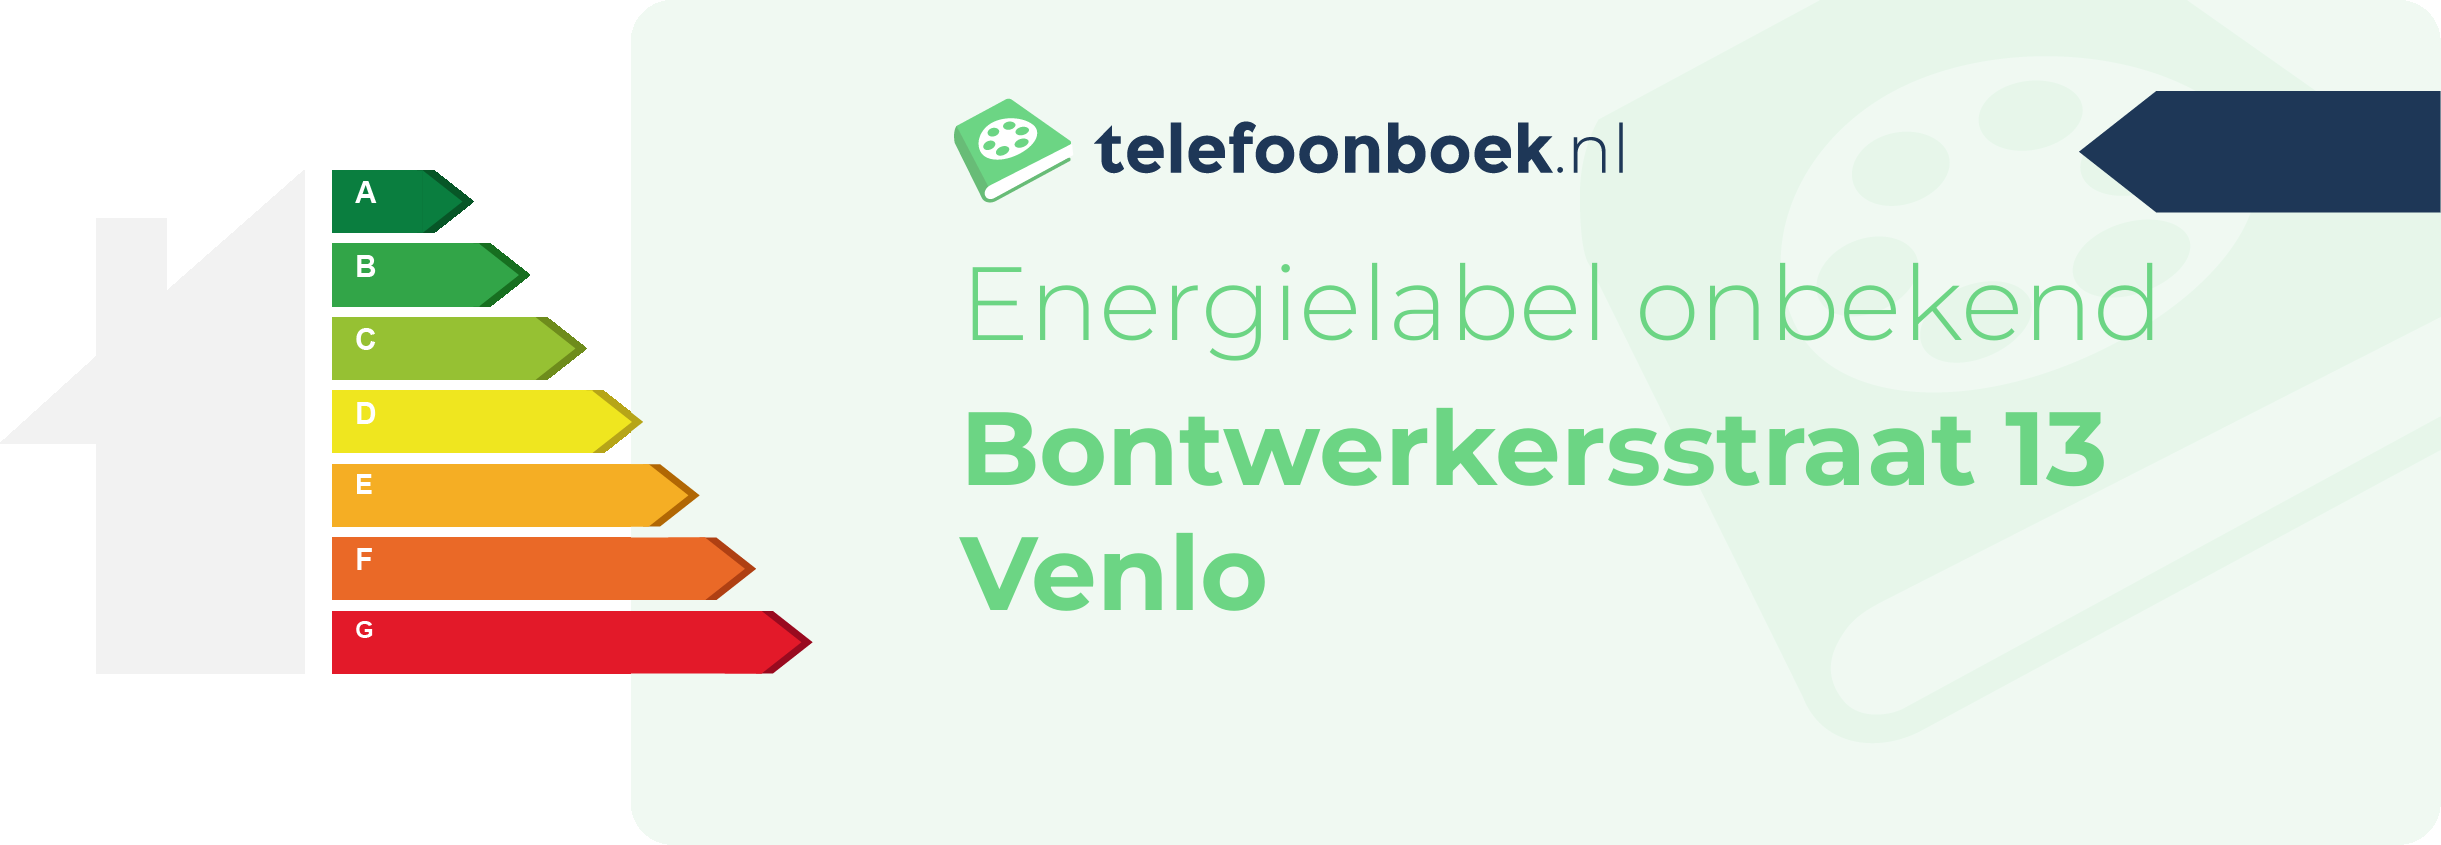 Energielabel Bontwerkersstraat 13 Venlo